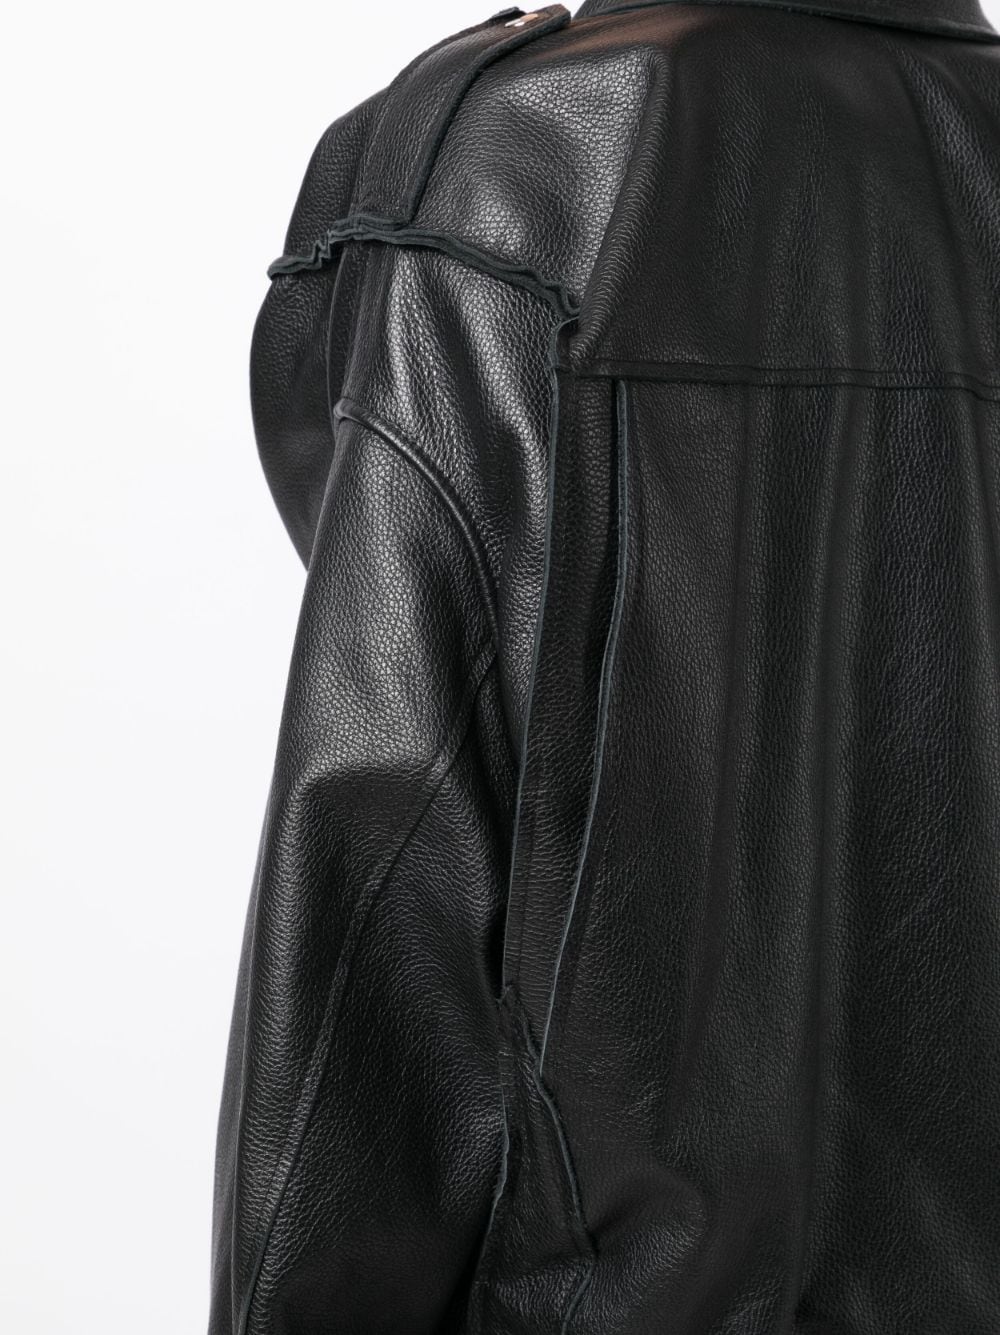 Natasha Zinko Zipped Leather Jacket - Farfetch